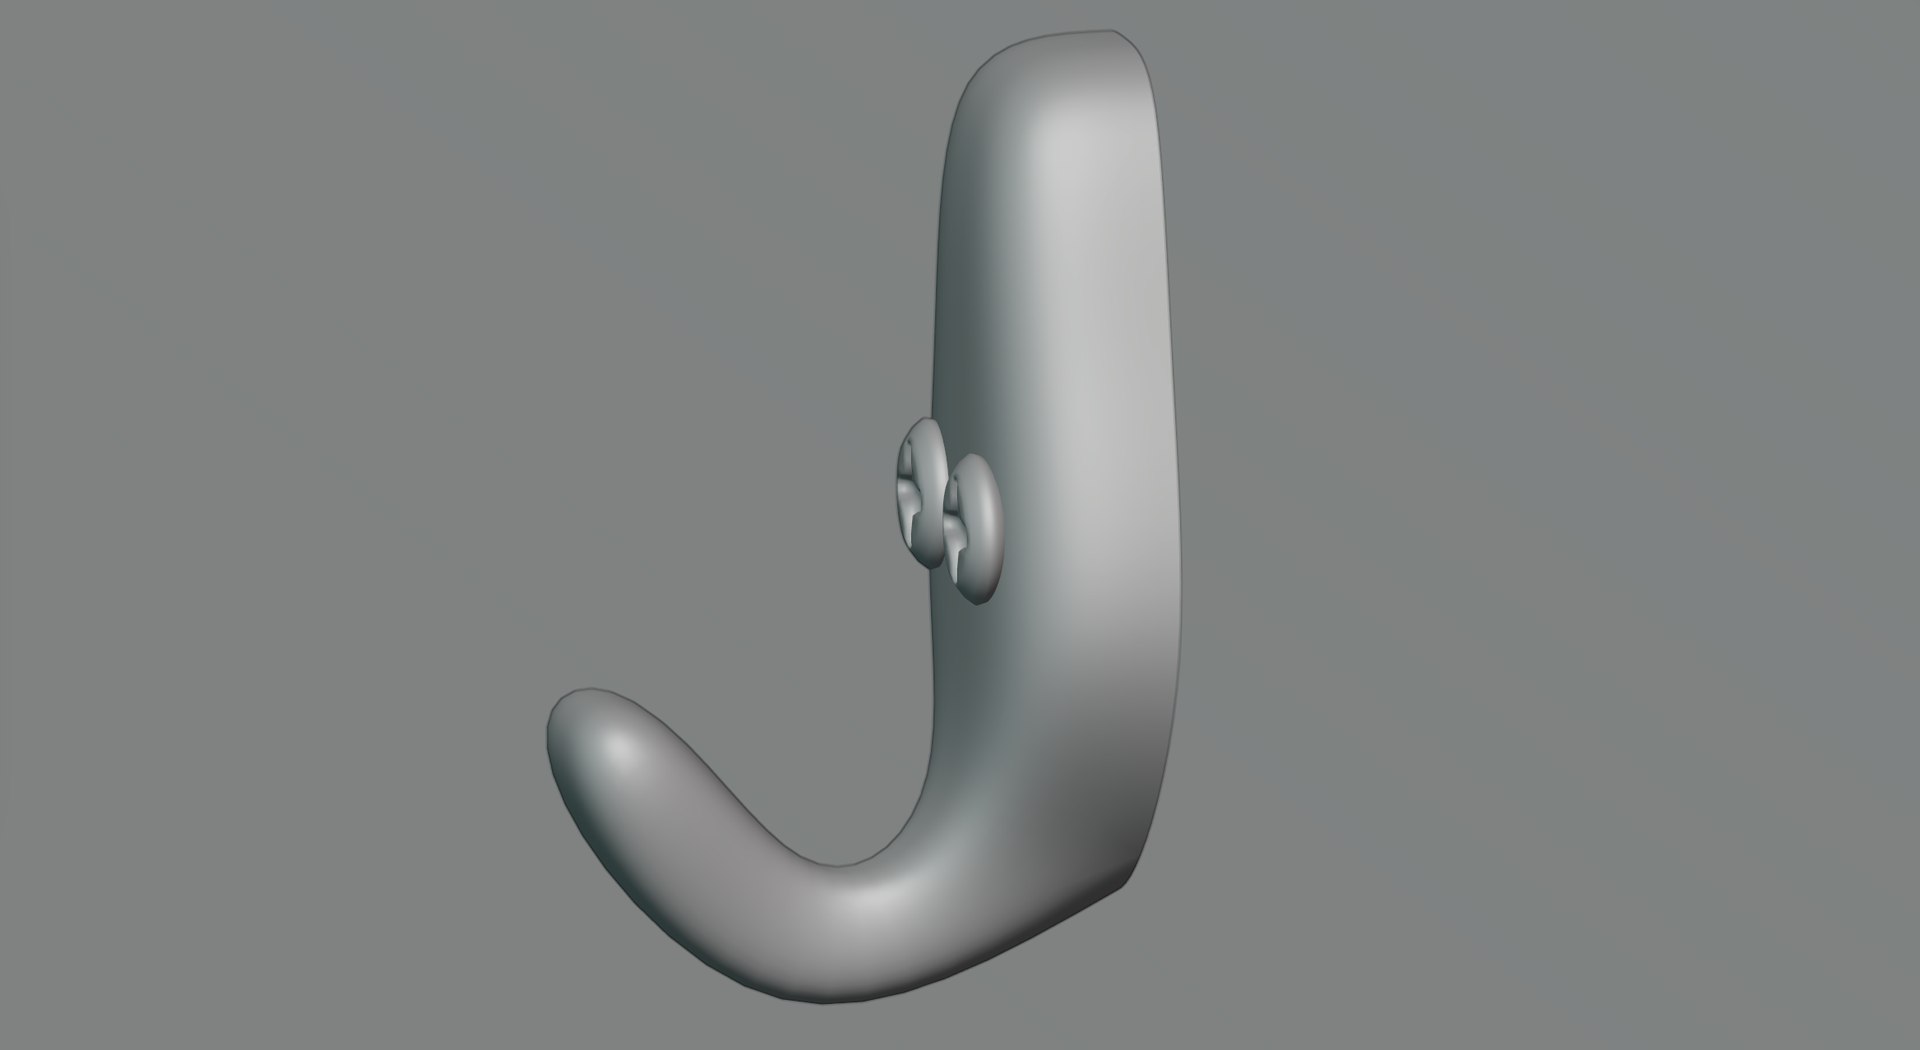 Hook for things 3D model - TurboSquid 1807604